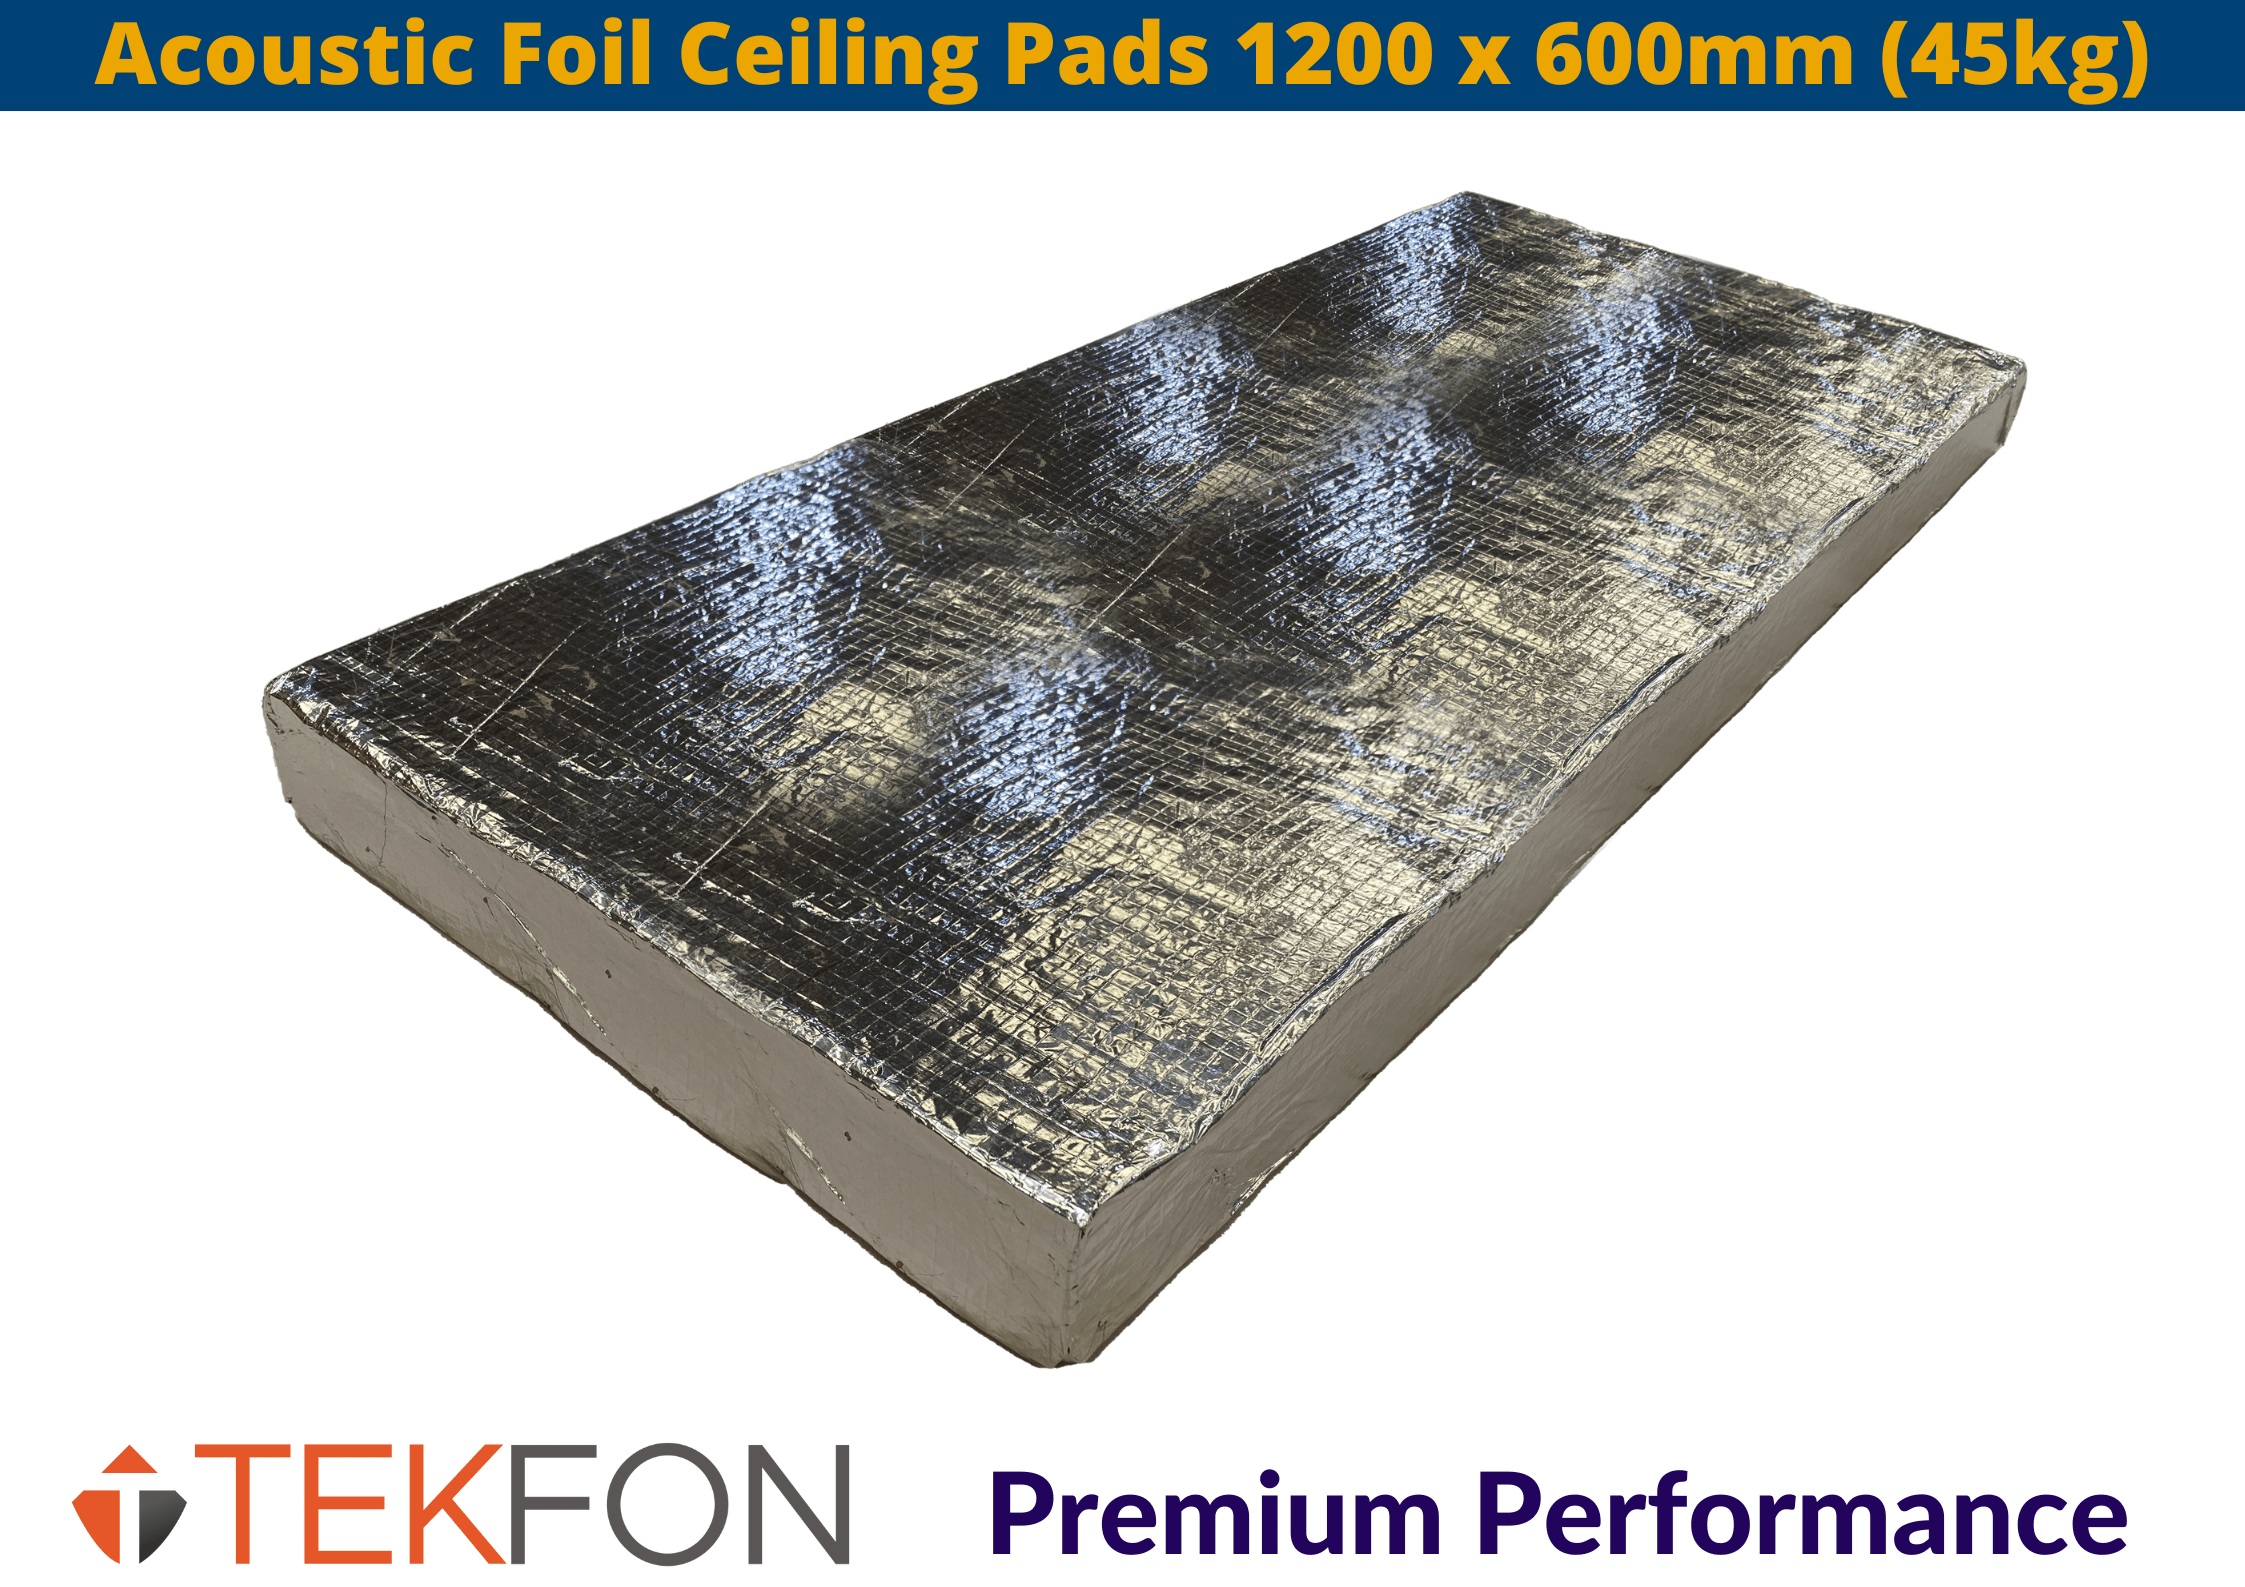 Tekfon Insulation Tekfon Acoustic Foil Ceiling Pads | 1200 x 600mm (45kgm3) Acoustic Foil Ceiling Pads 600 x 600mm (45kg) | insulationuk.co.uk